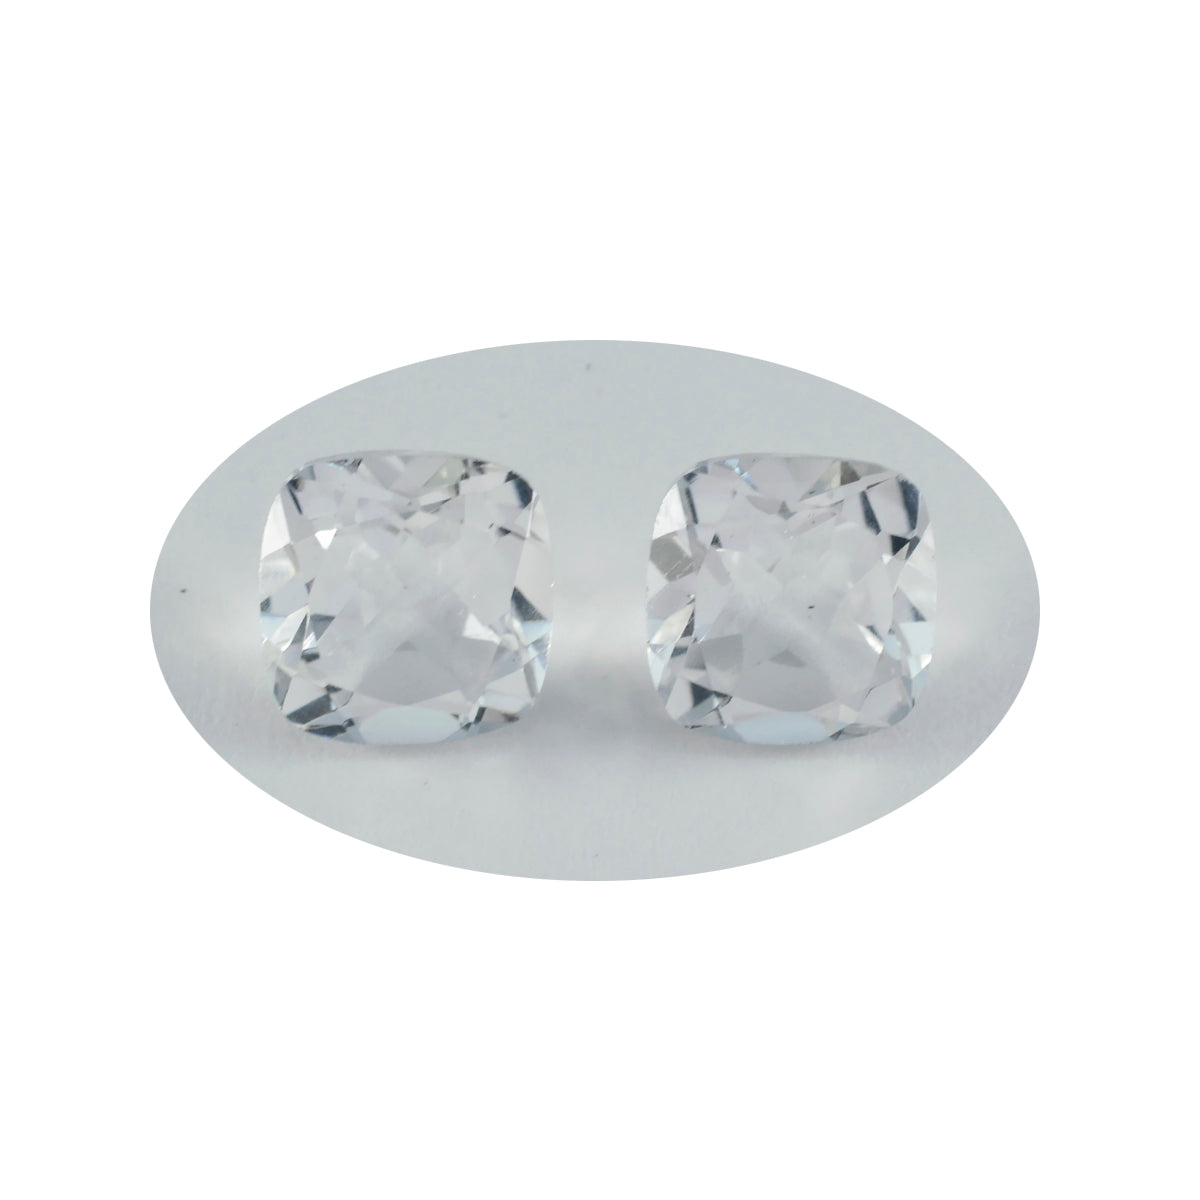 Riyogems 1PC White Crystal Quartz Faceted 11x11 mm Cushion Shape excellent Quality Loose Gemstone